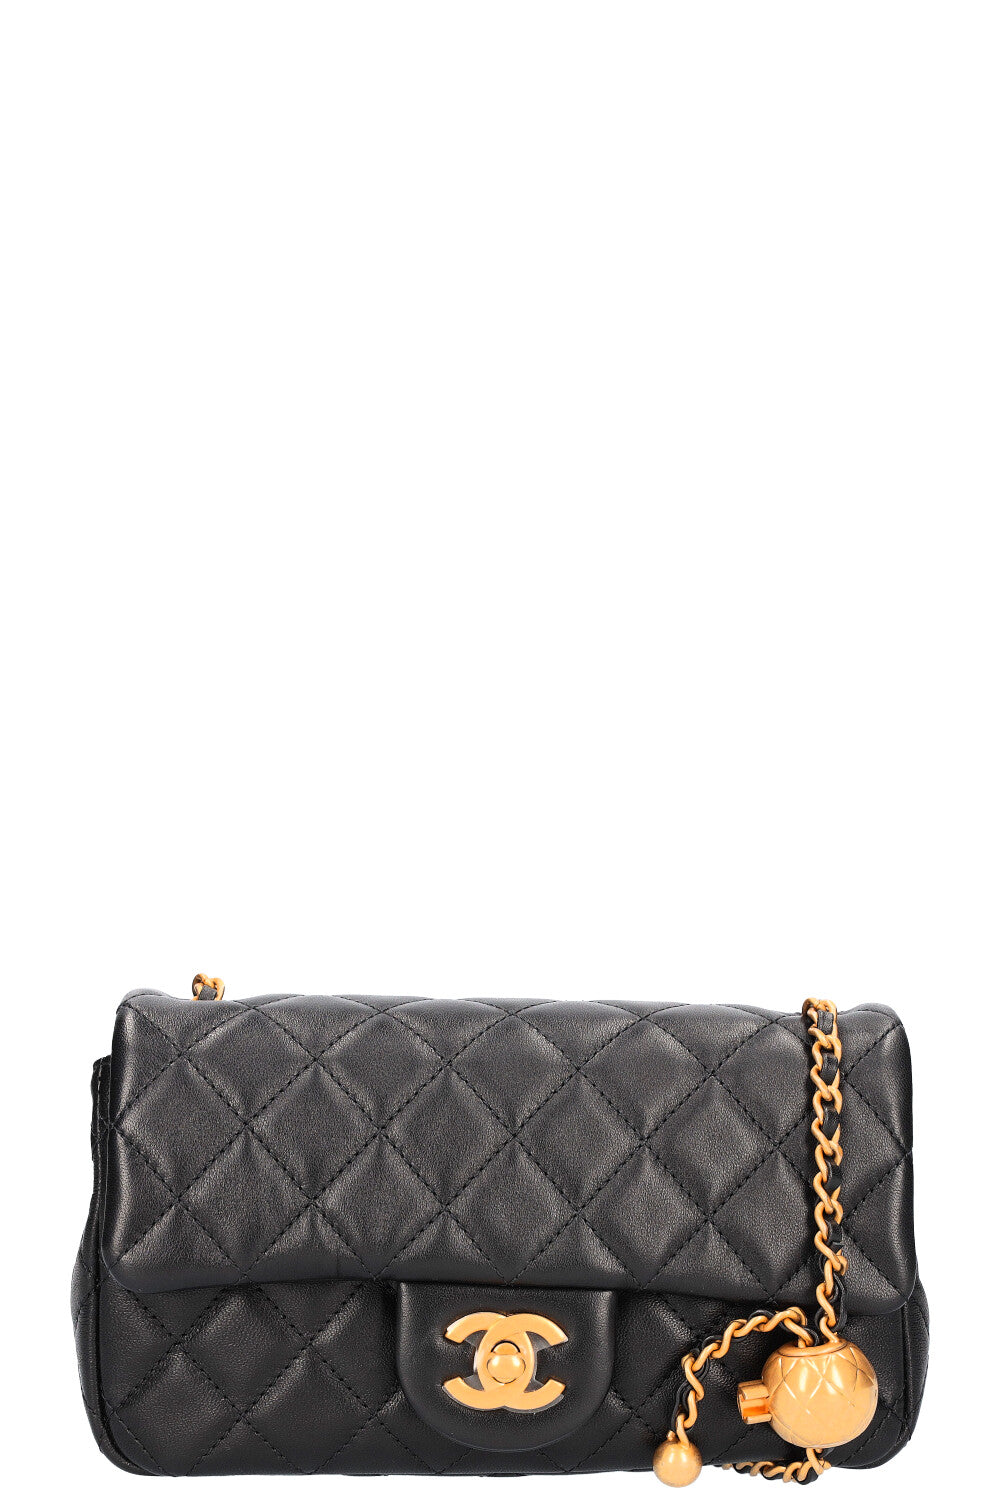 Chanel Timeless classic flap black lambskin GHW | Rich Diamonds